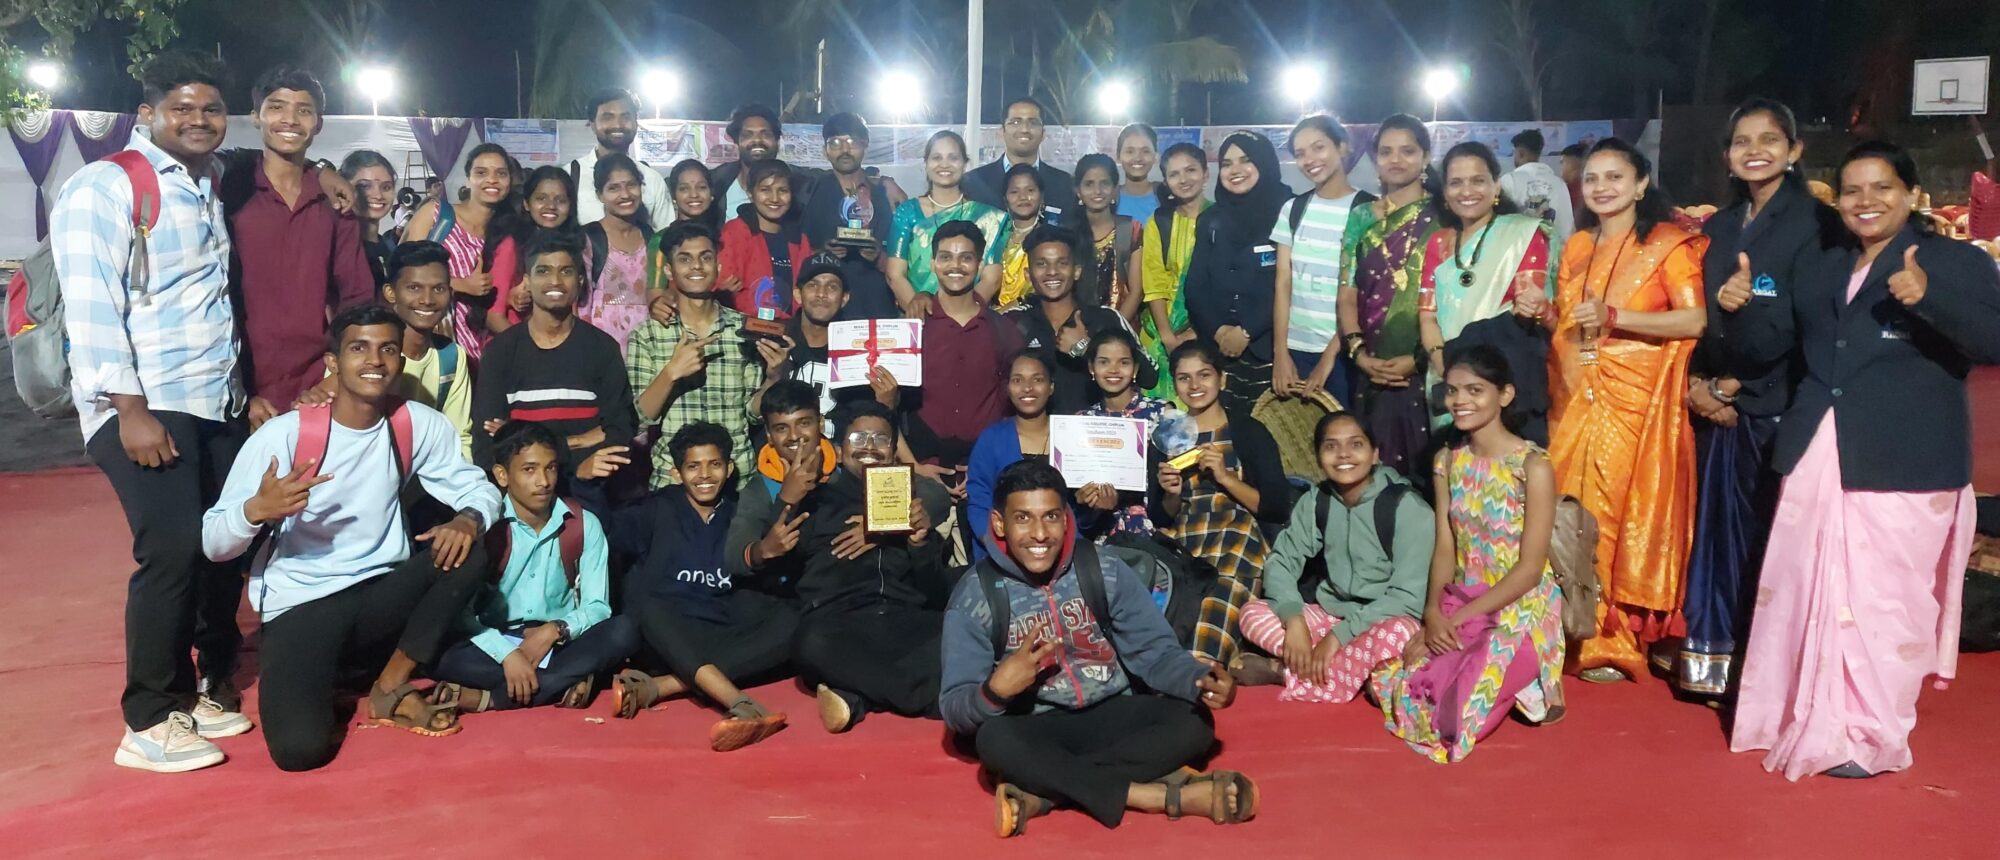 Success of Sringaratali College in Regal Trophy